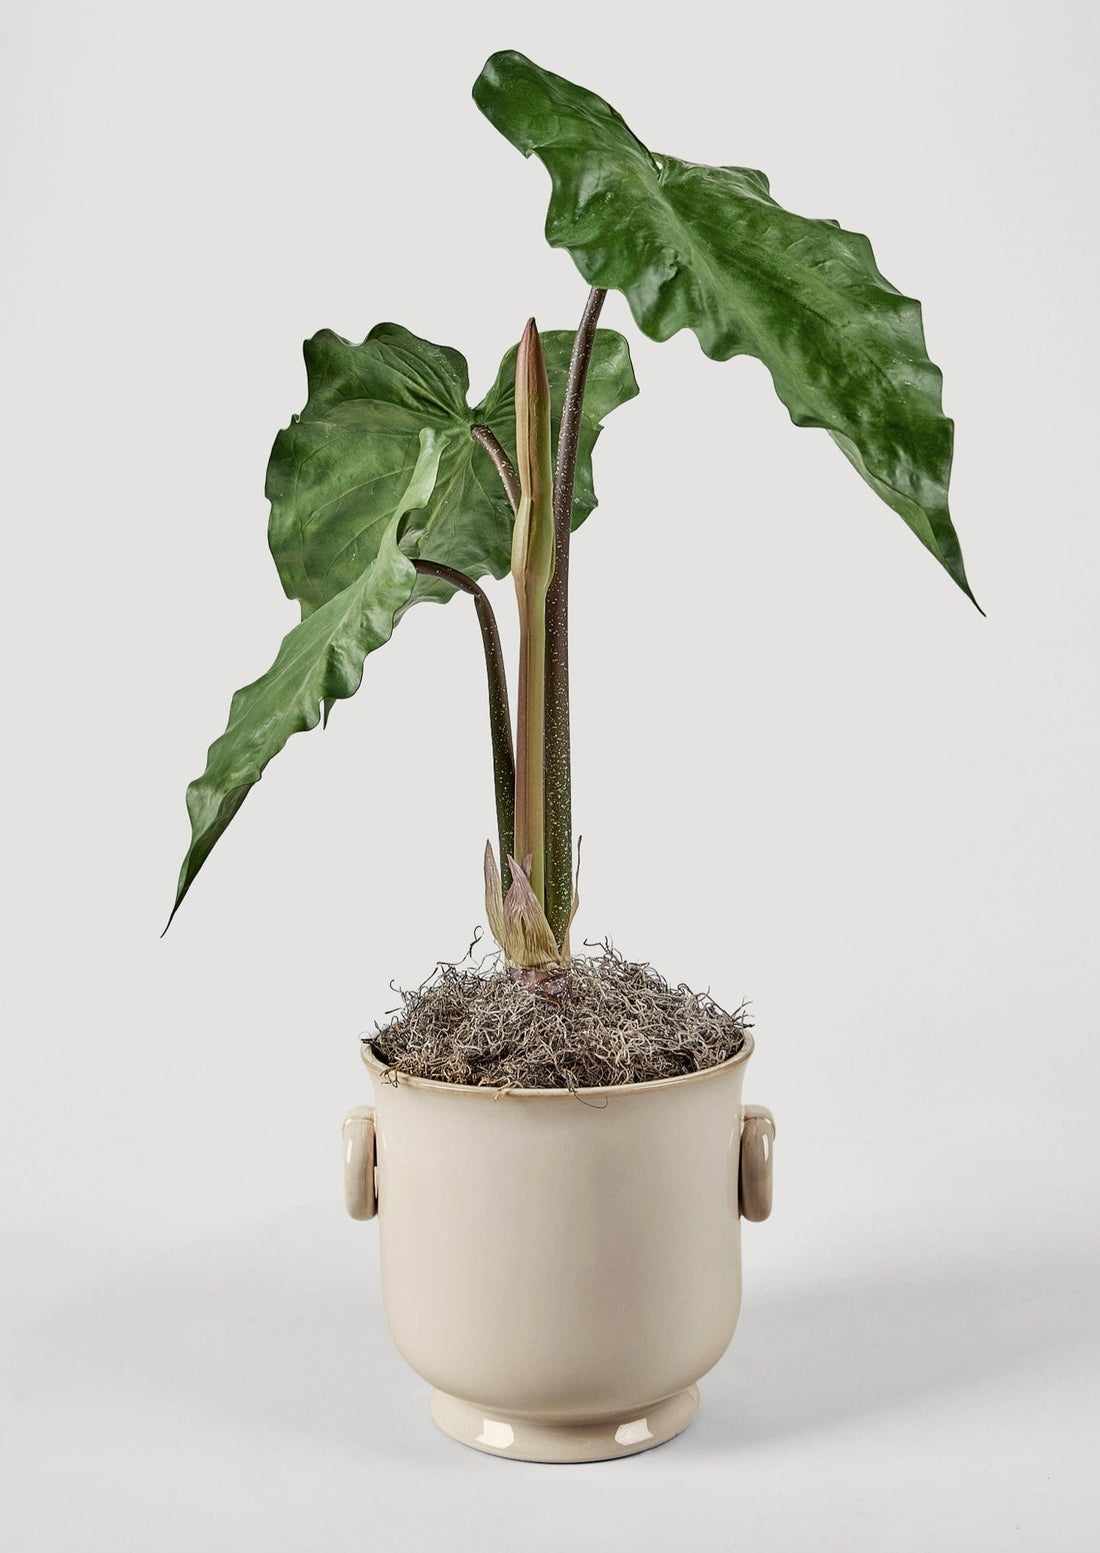 Artificial Tropical Alocasia Plant Styled in Large Cream Ceramic Pot